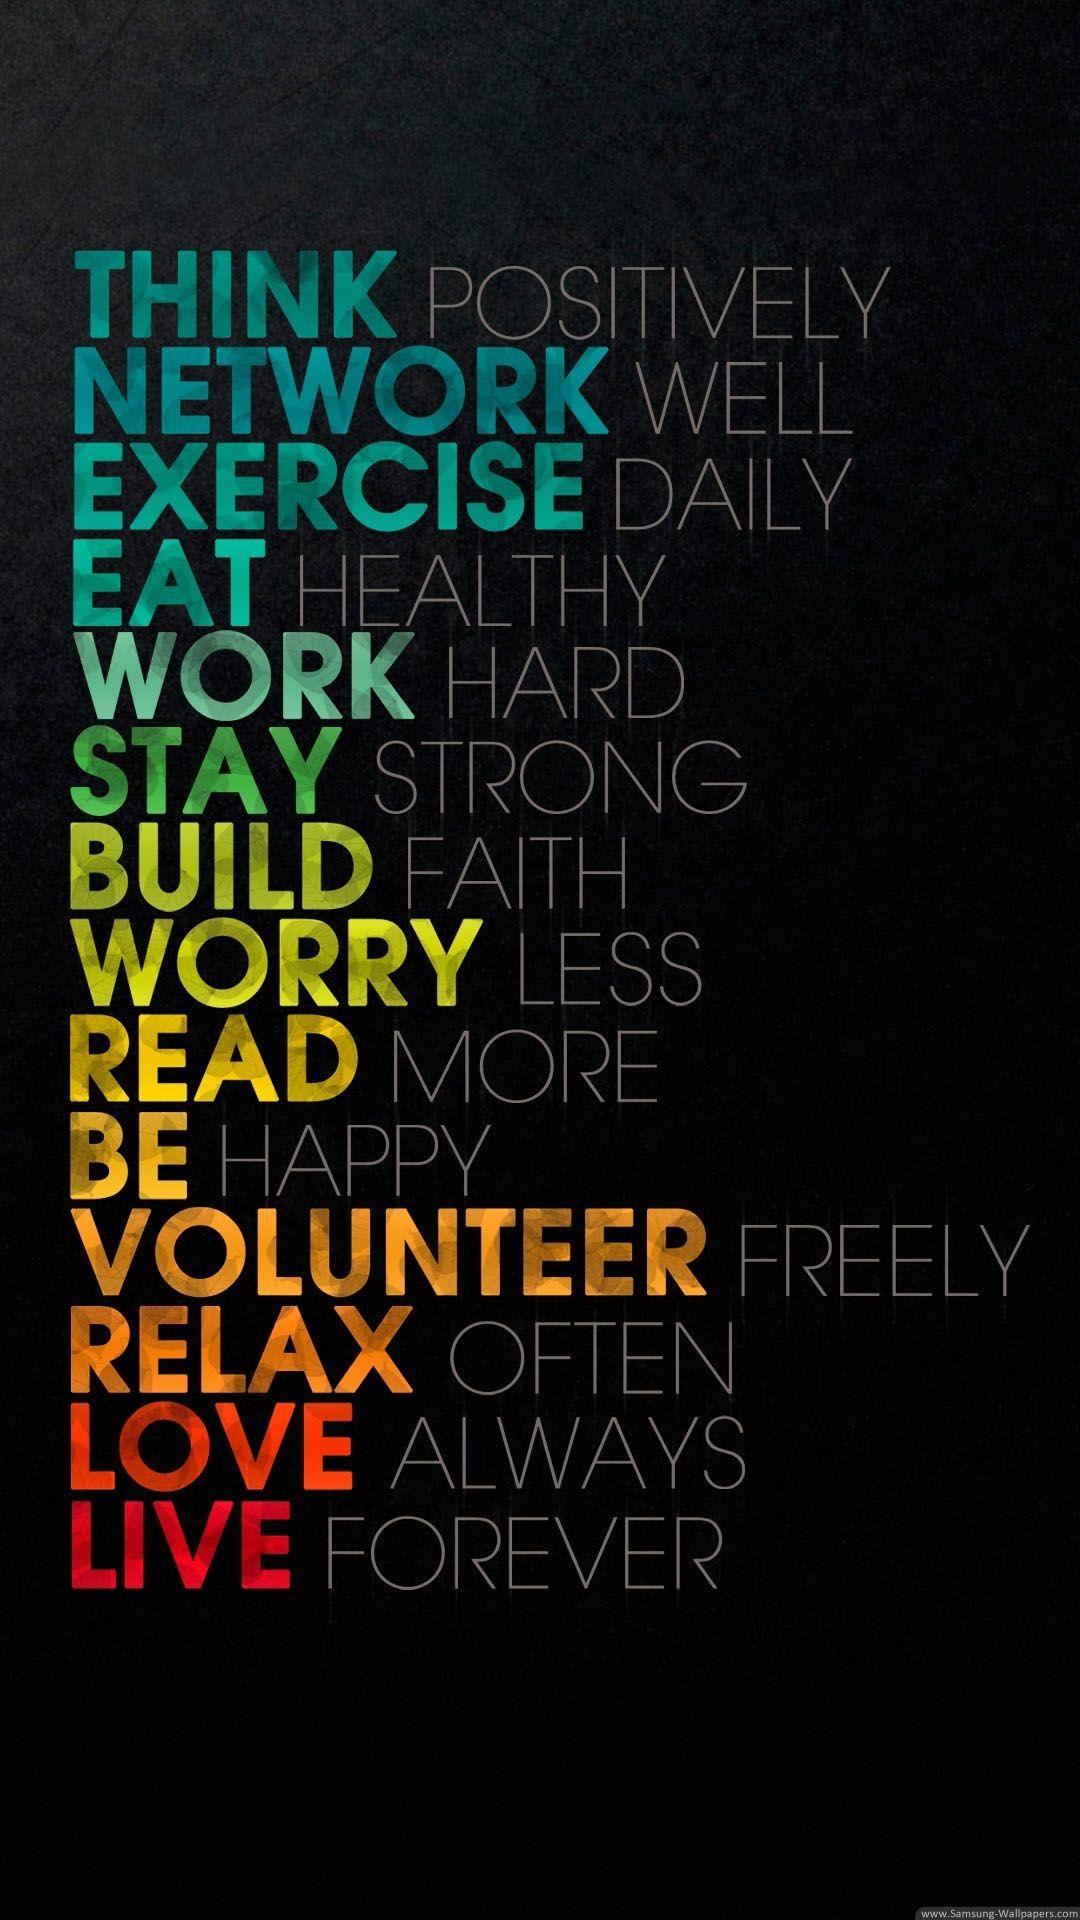 Words Of Wisdom iPhone 6 Plus HD Wallpaper. Words of Wisdom